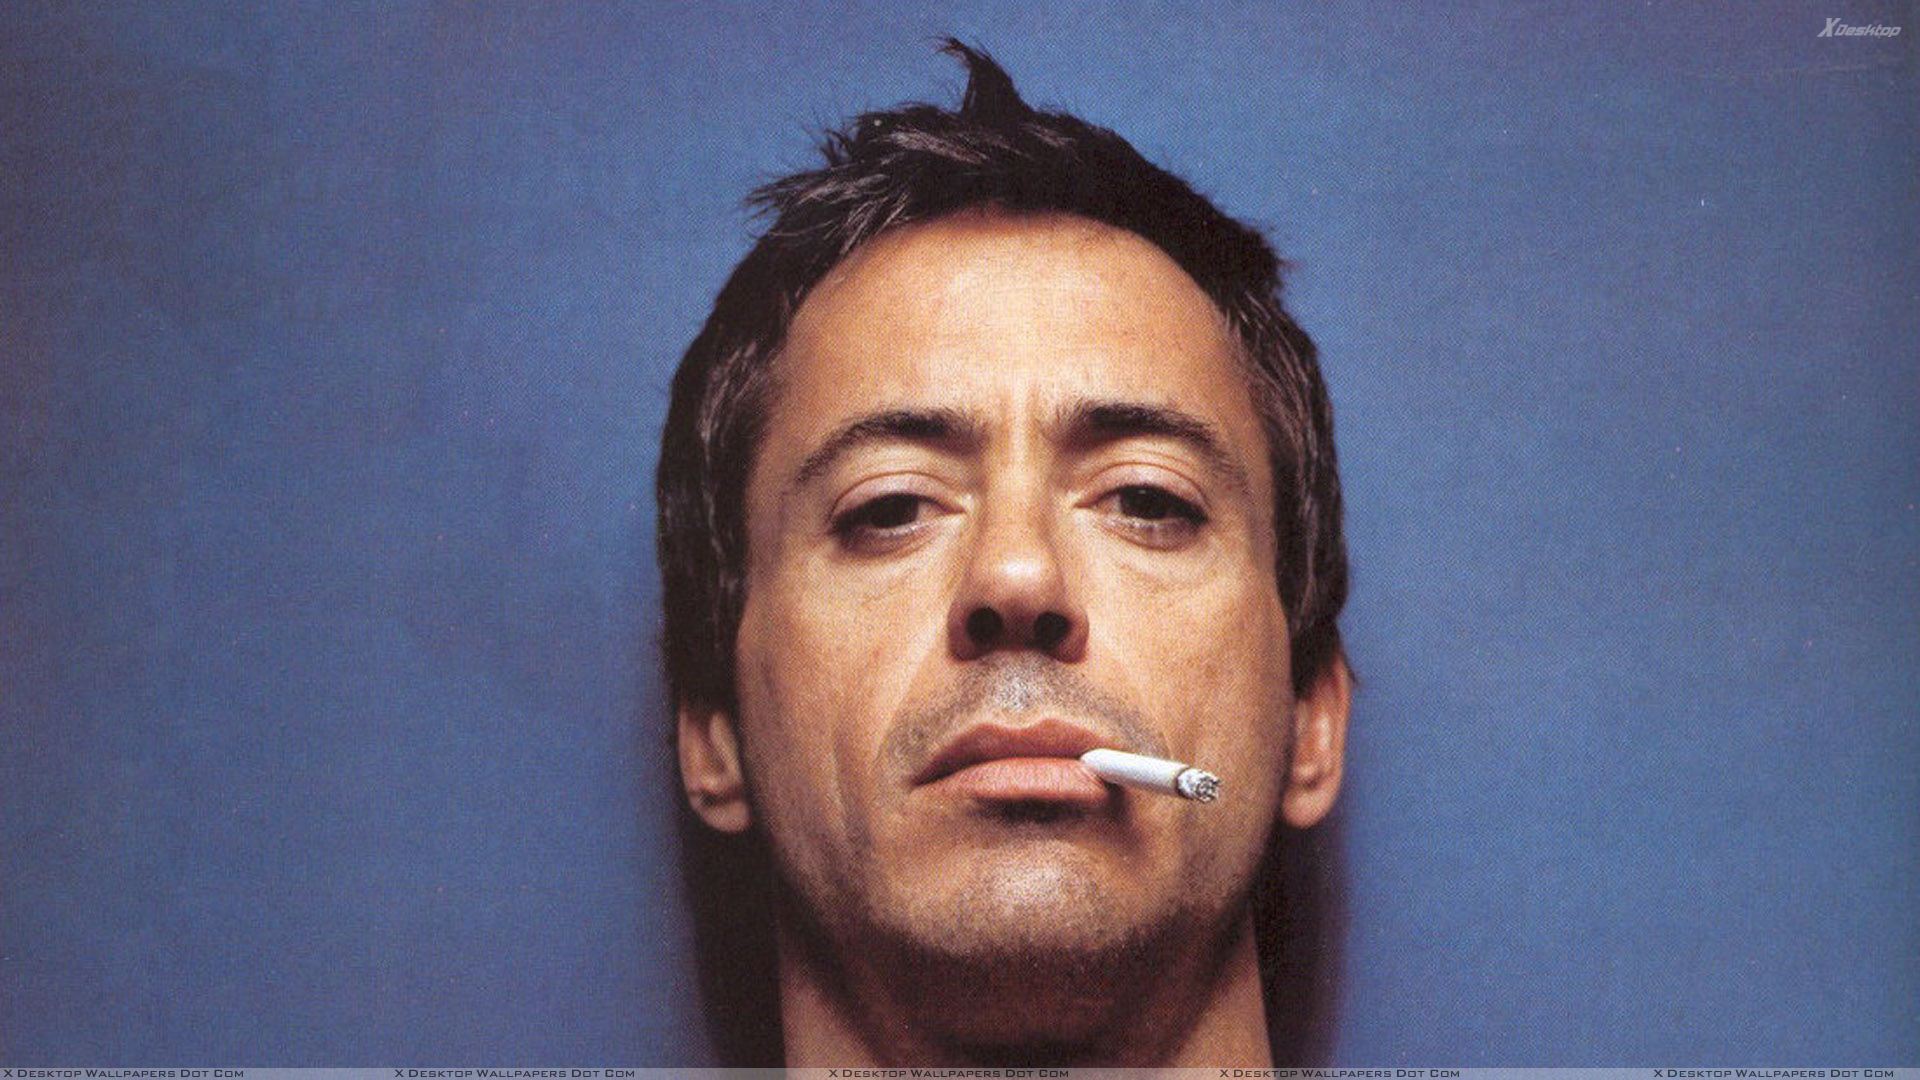 Robert Downey Jr Doing Smoking Face Closeup N Blue Background